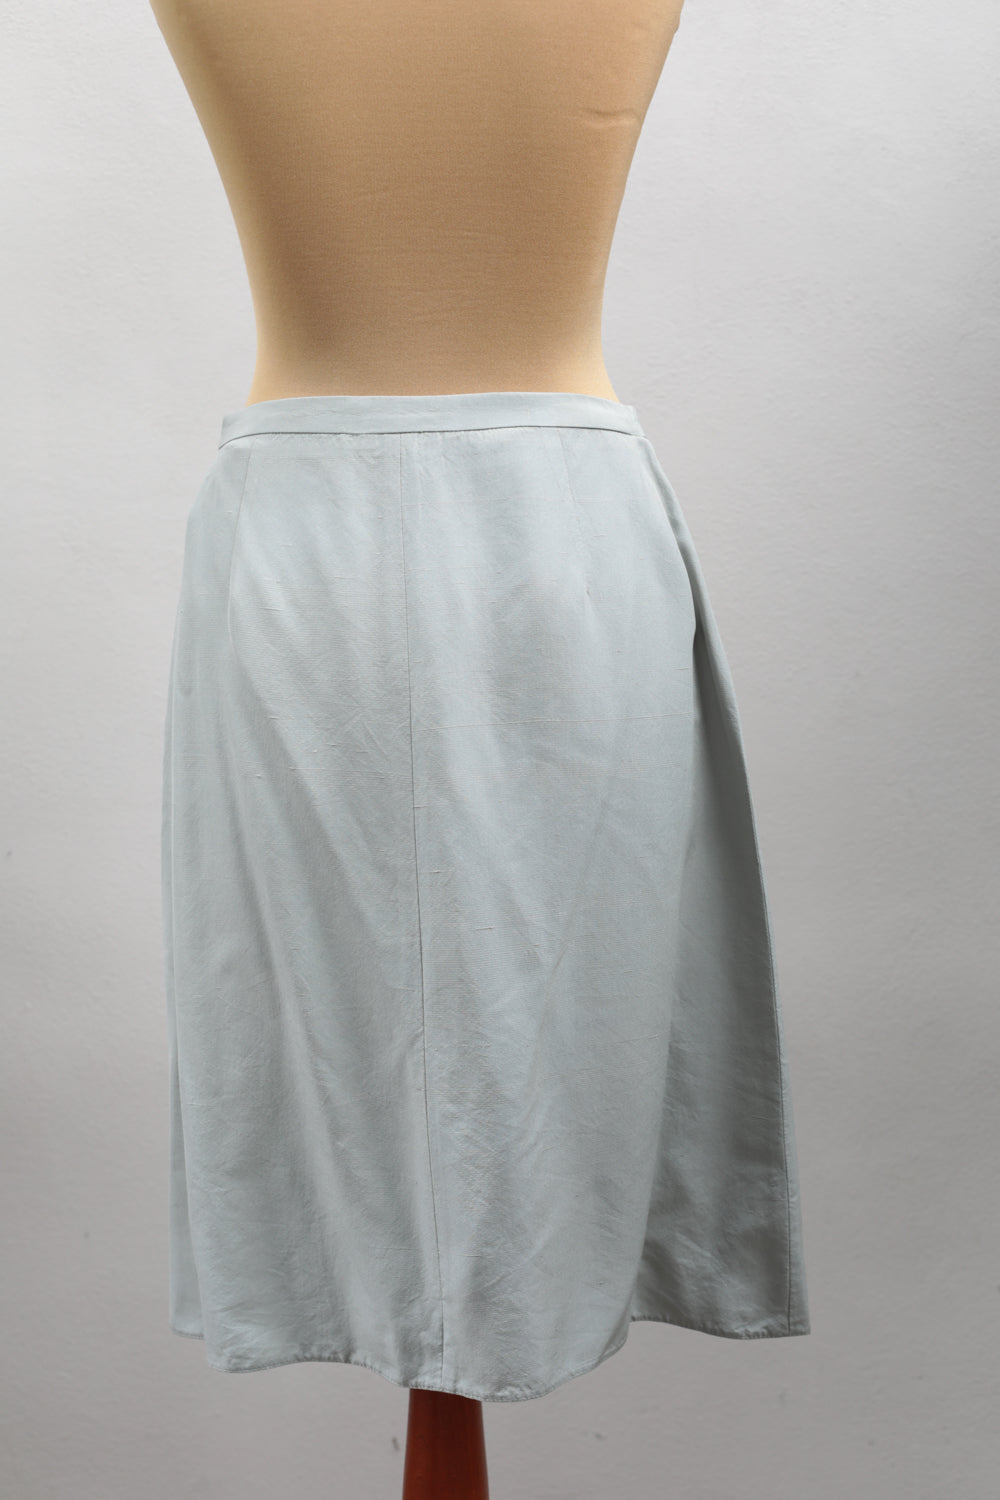 Giorgio Armani Vintage Raw Silk Skirt